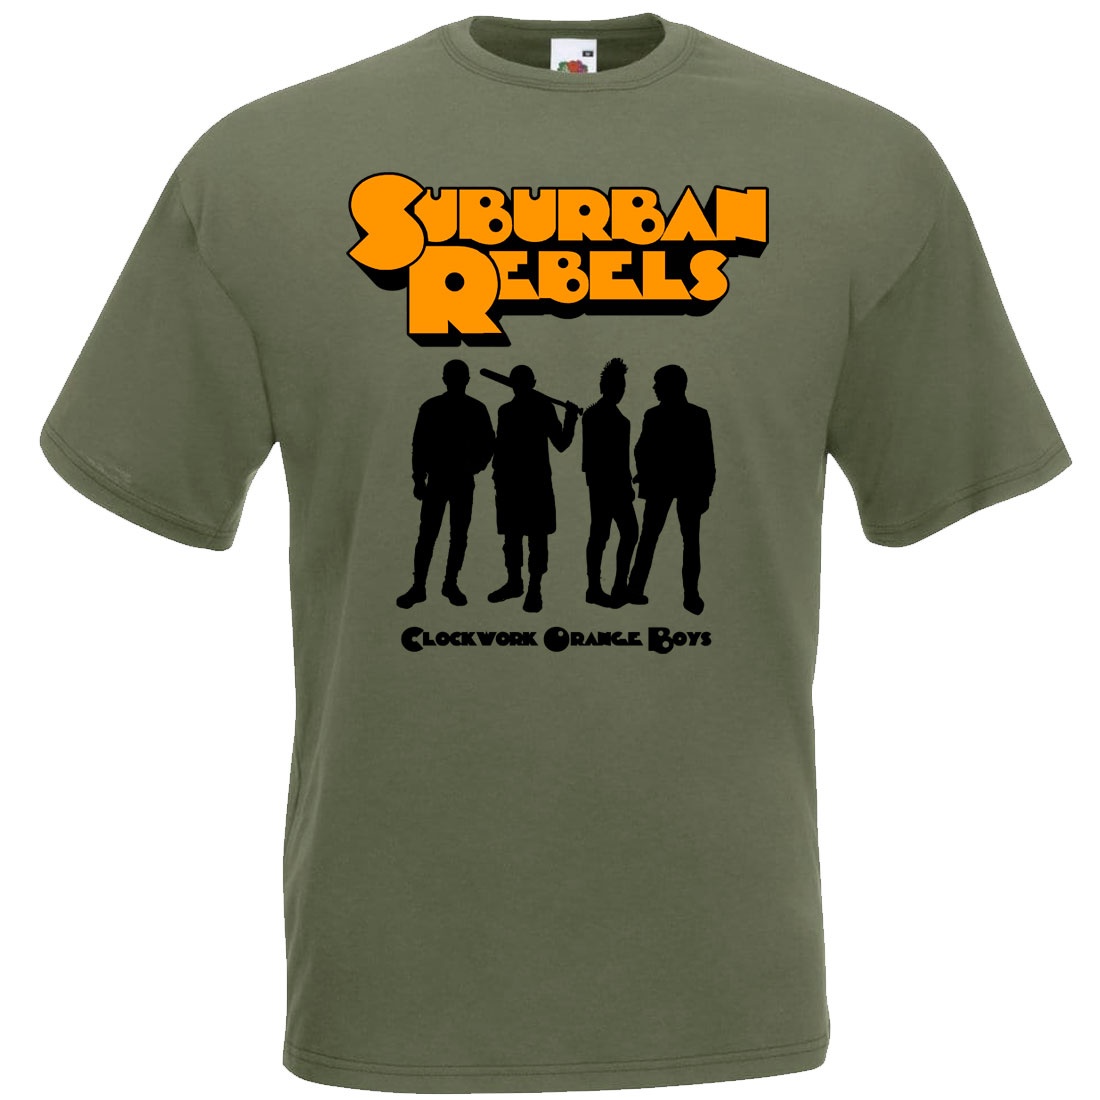 SUBURBAN REBELS Clockwork Orange Boys in Olive green Tshirt